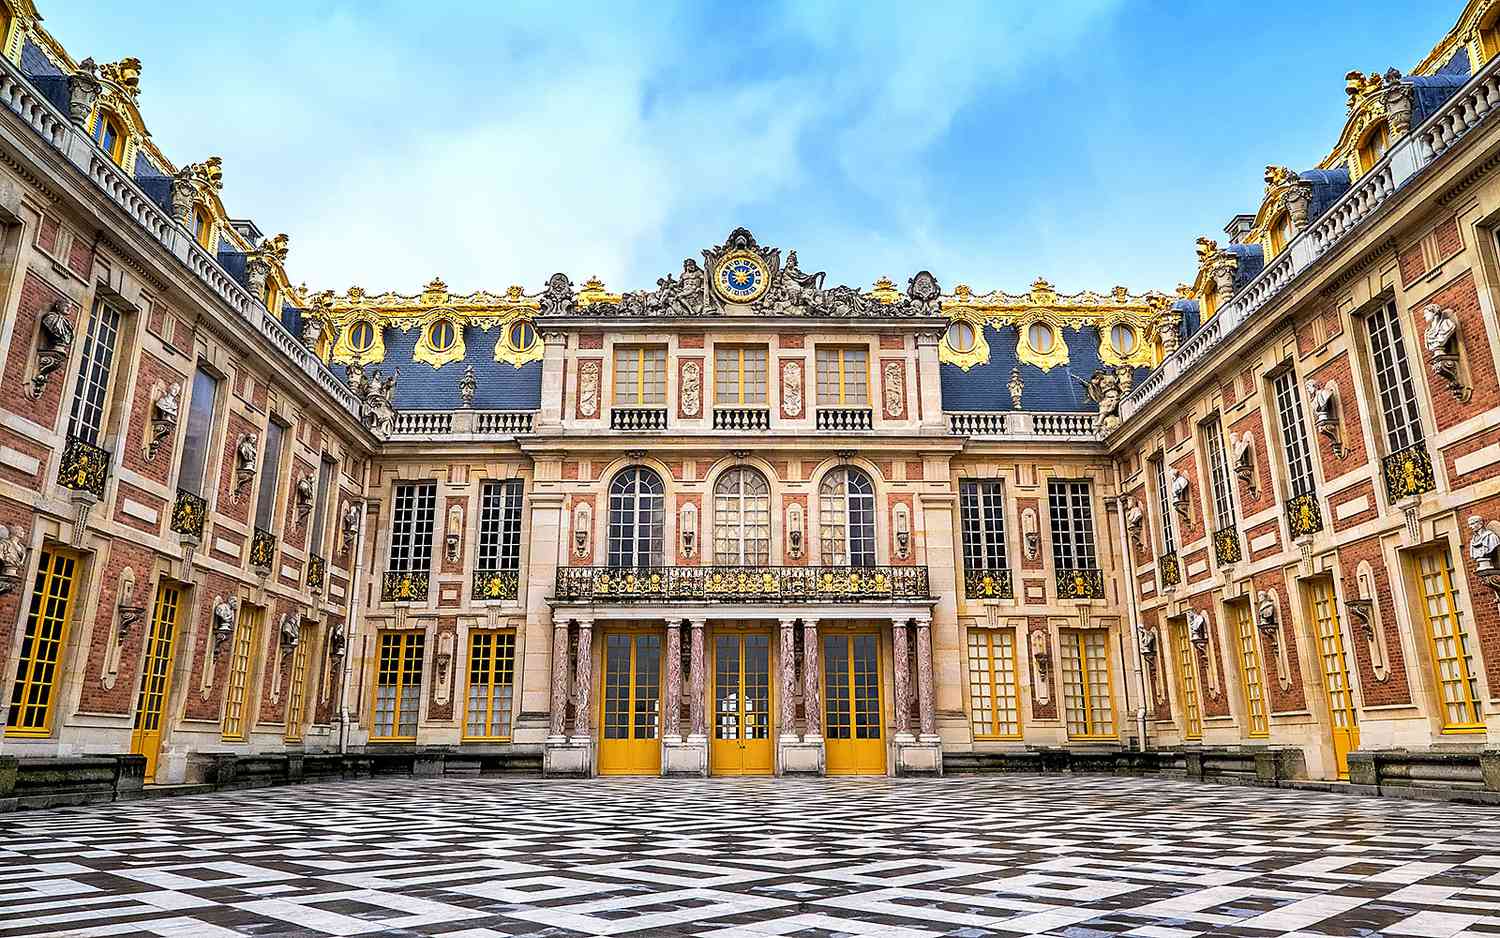 Stroll around Versailles Palace_s splendor